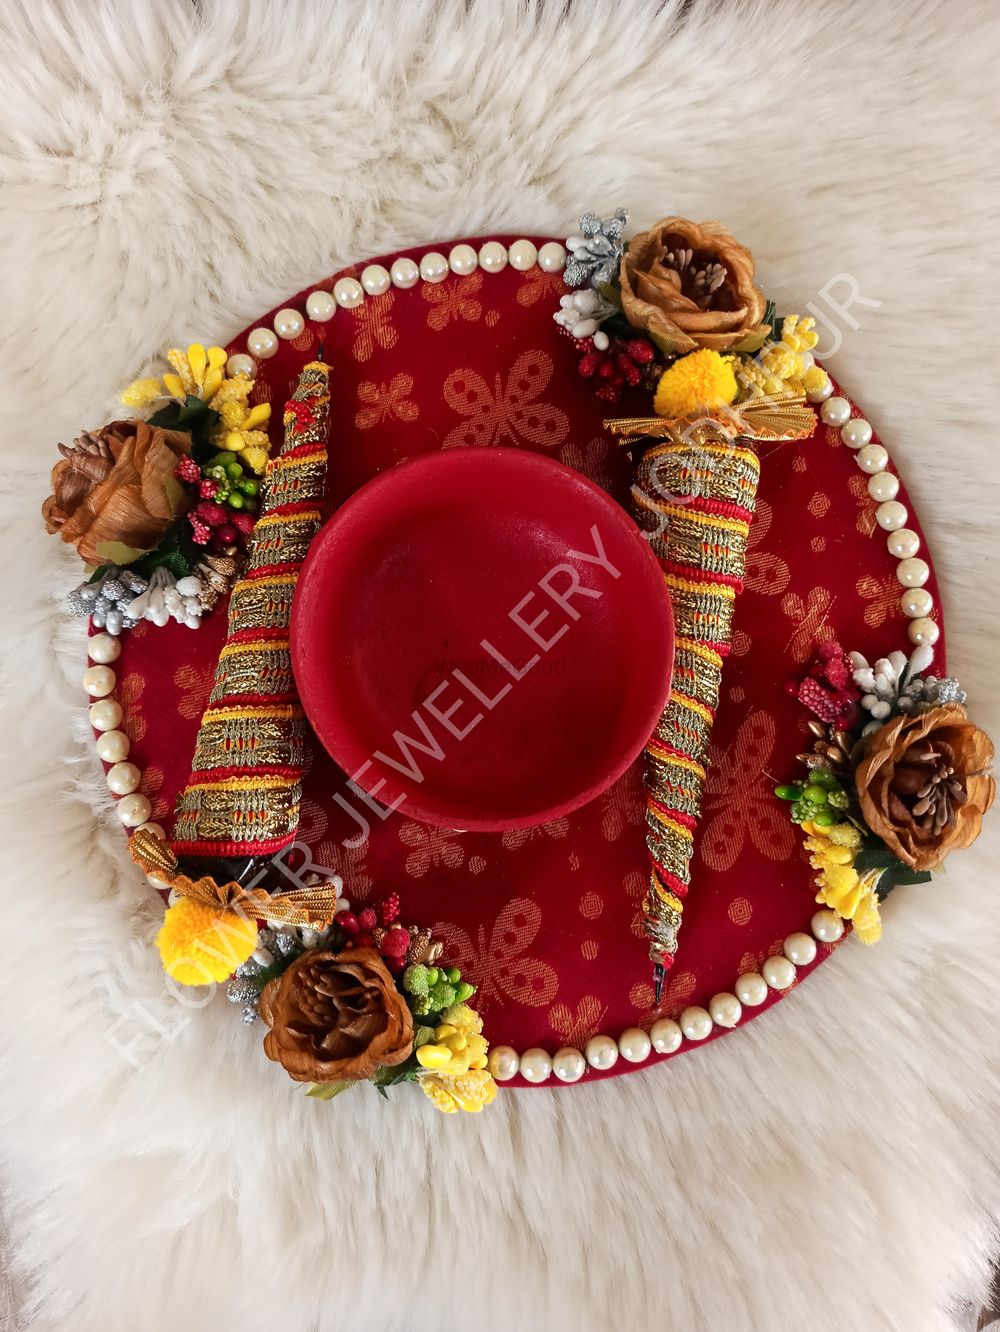 Photo From Mehendi Platter - By Flower Jewellery Jodhpur